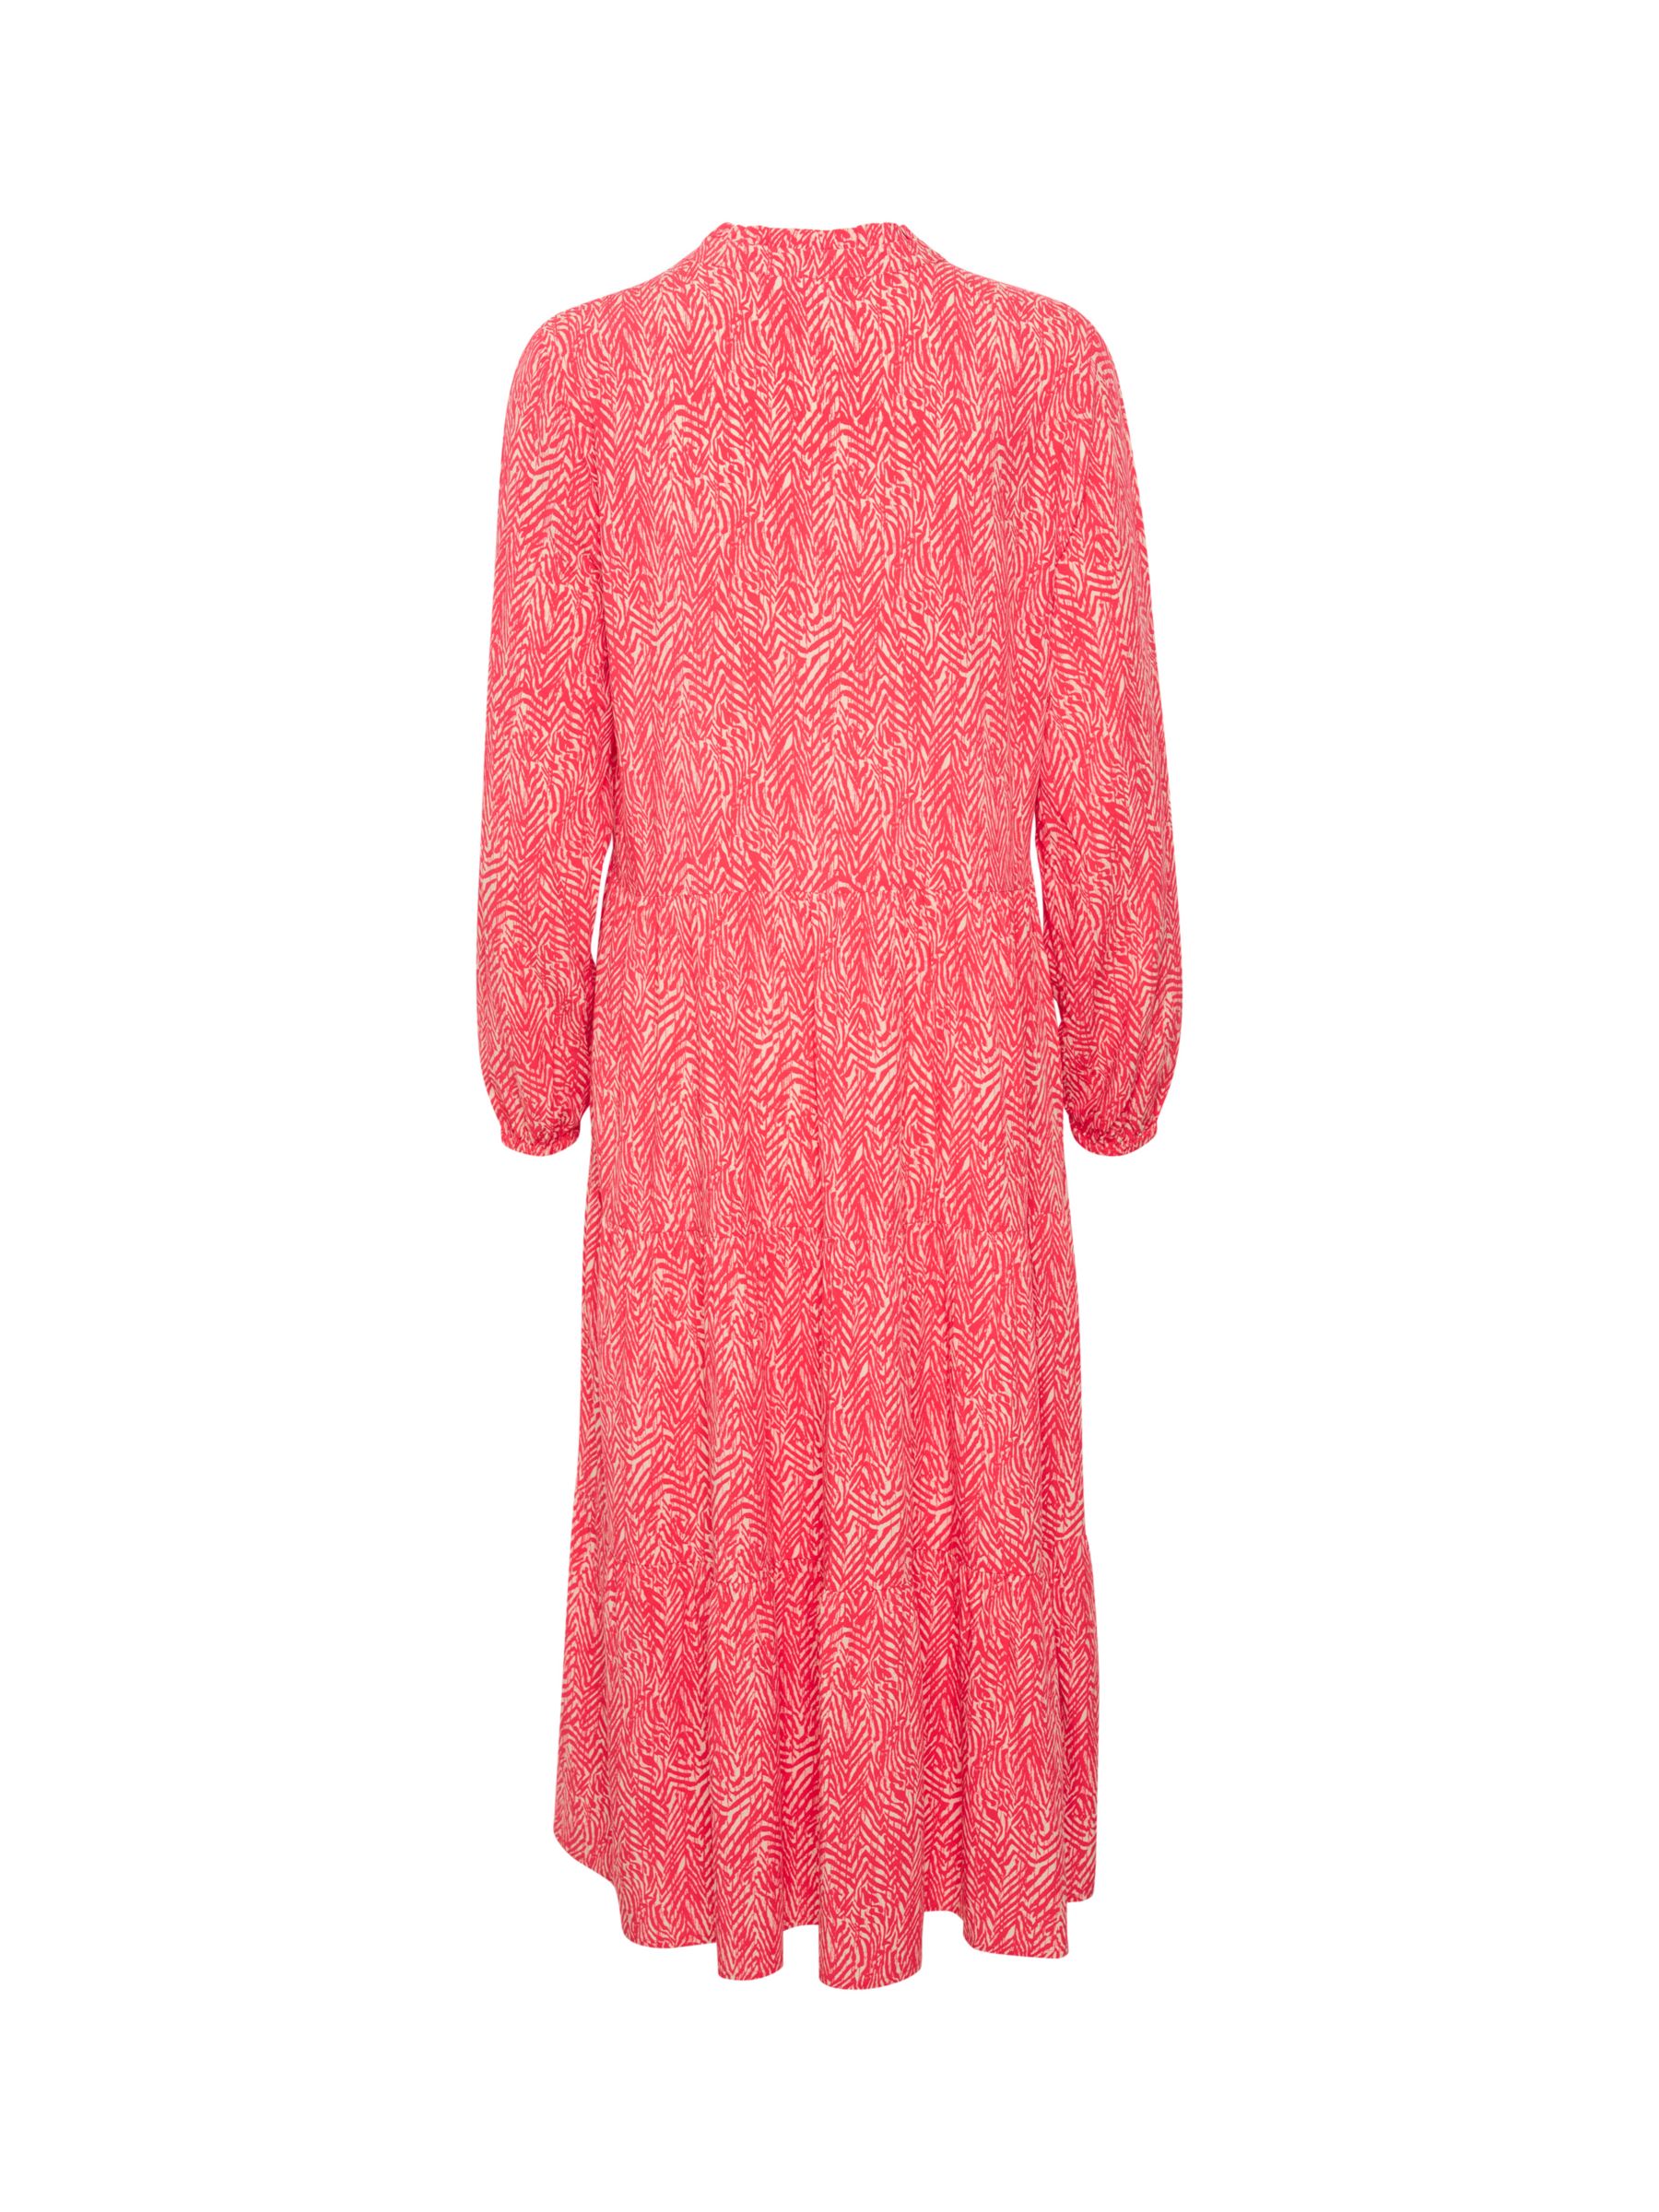 Saint Tropez Eda Abstract Print Tiered Midi Dress, Hibiscus/Multi, XL